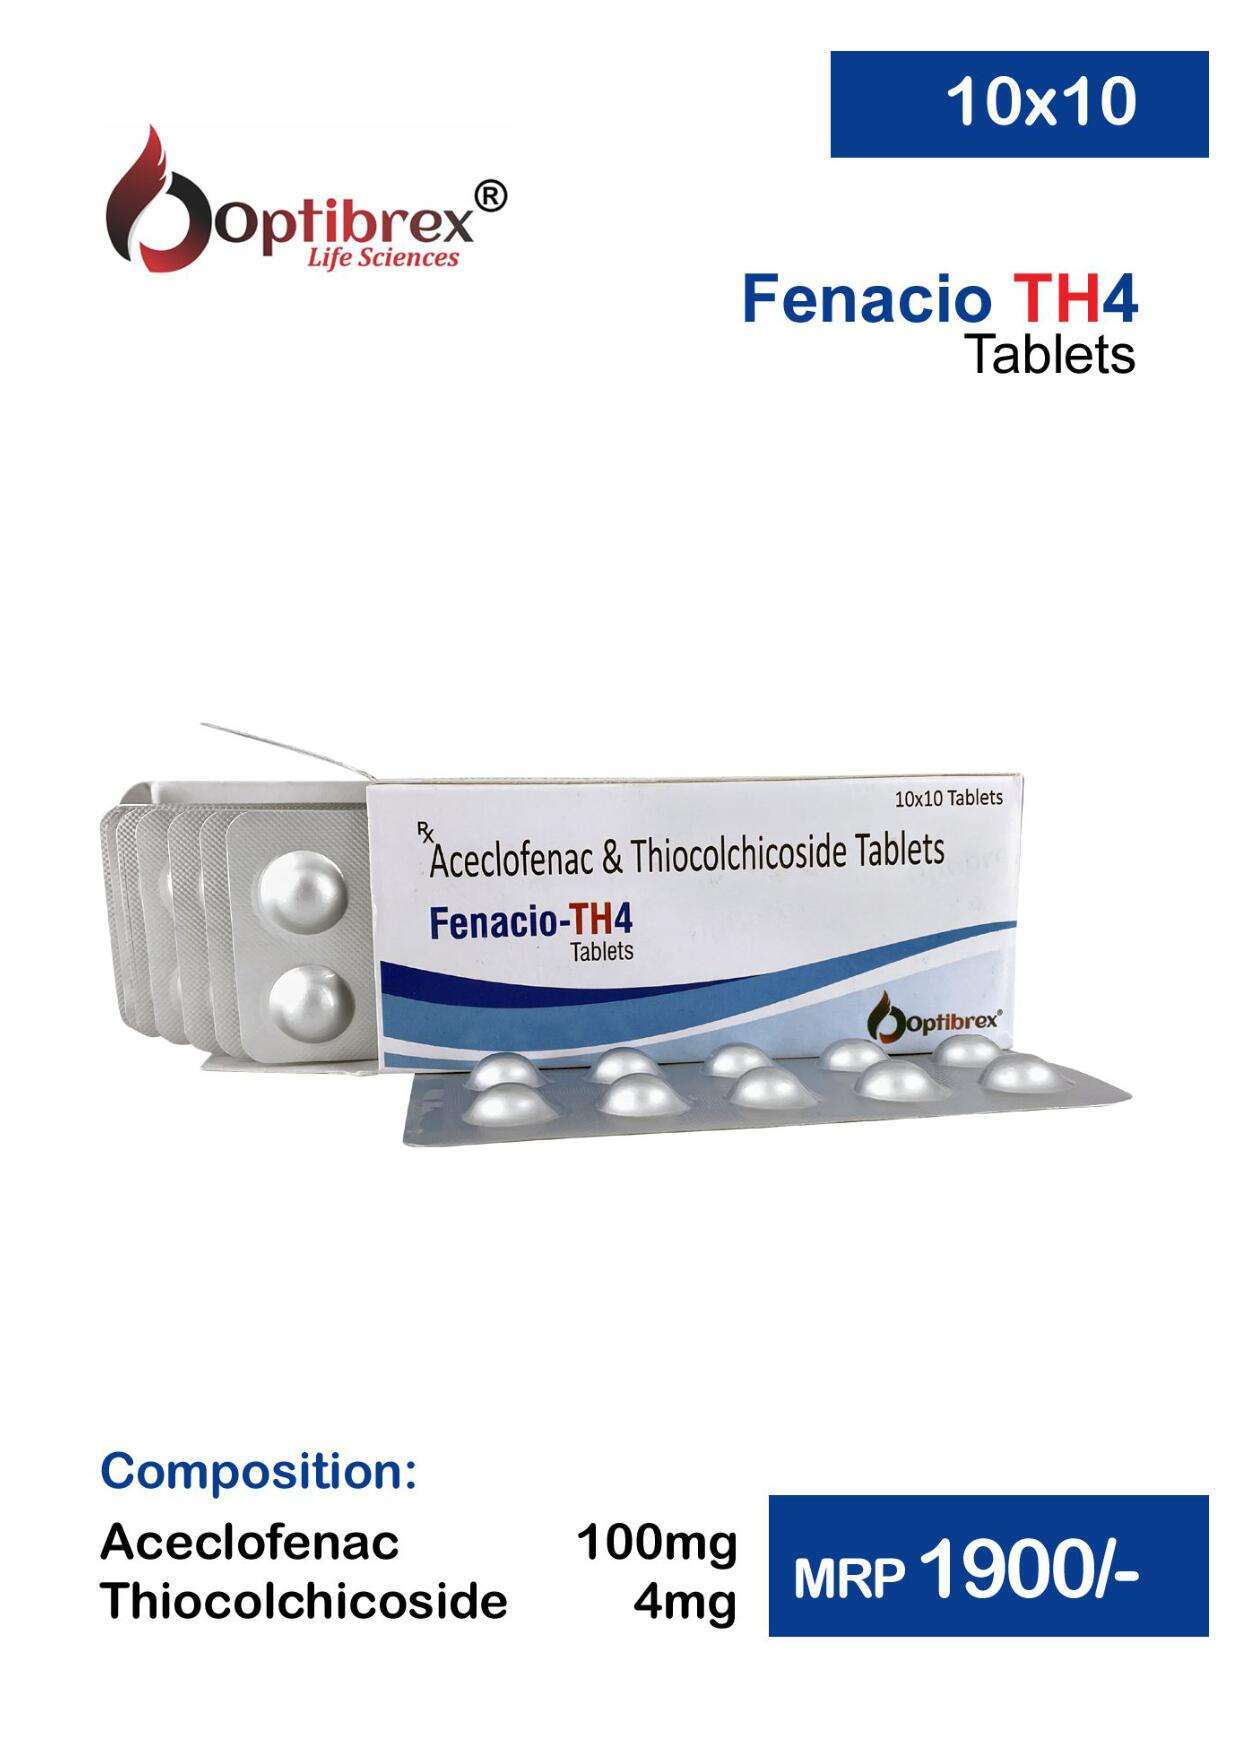 aceclofenac 100mg. + thiocolchicoside 4mg.